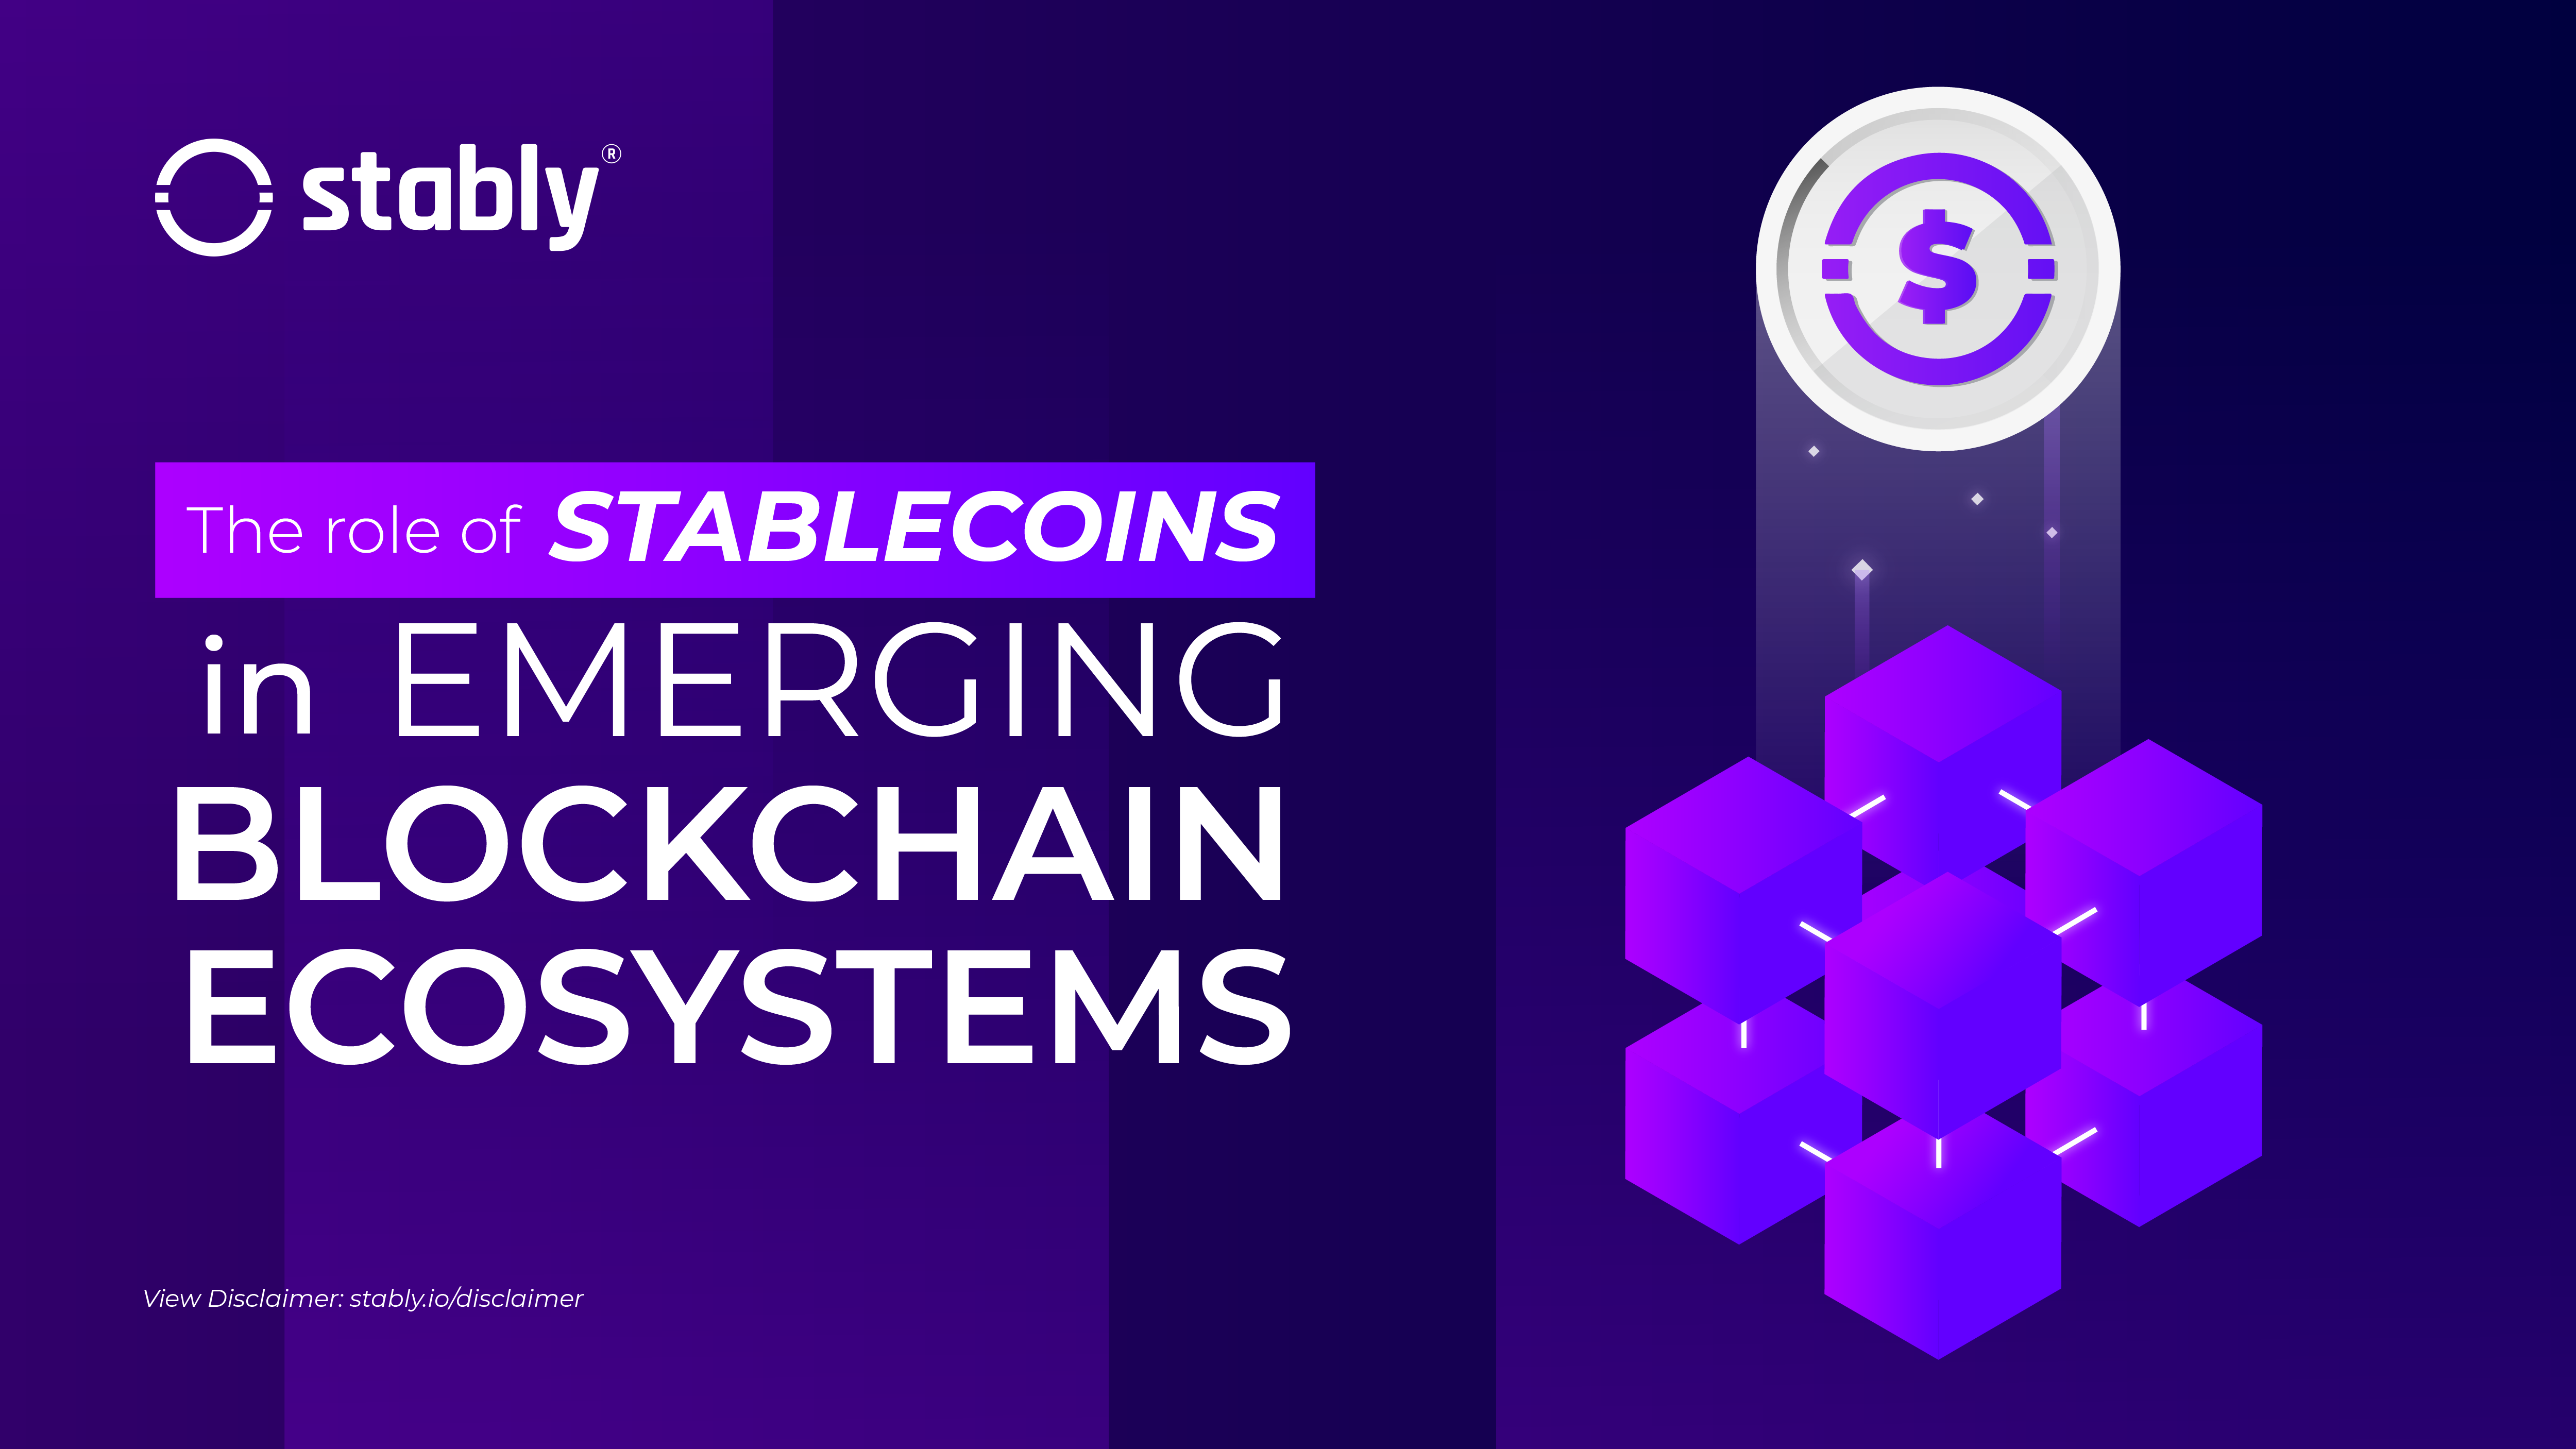 stablecoin, blockchain, ecosystem, DeFi, multichain, cross-chain